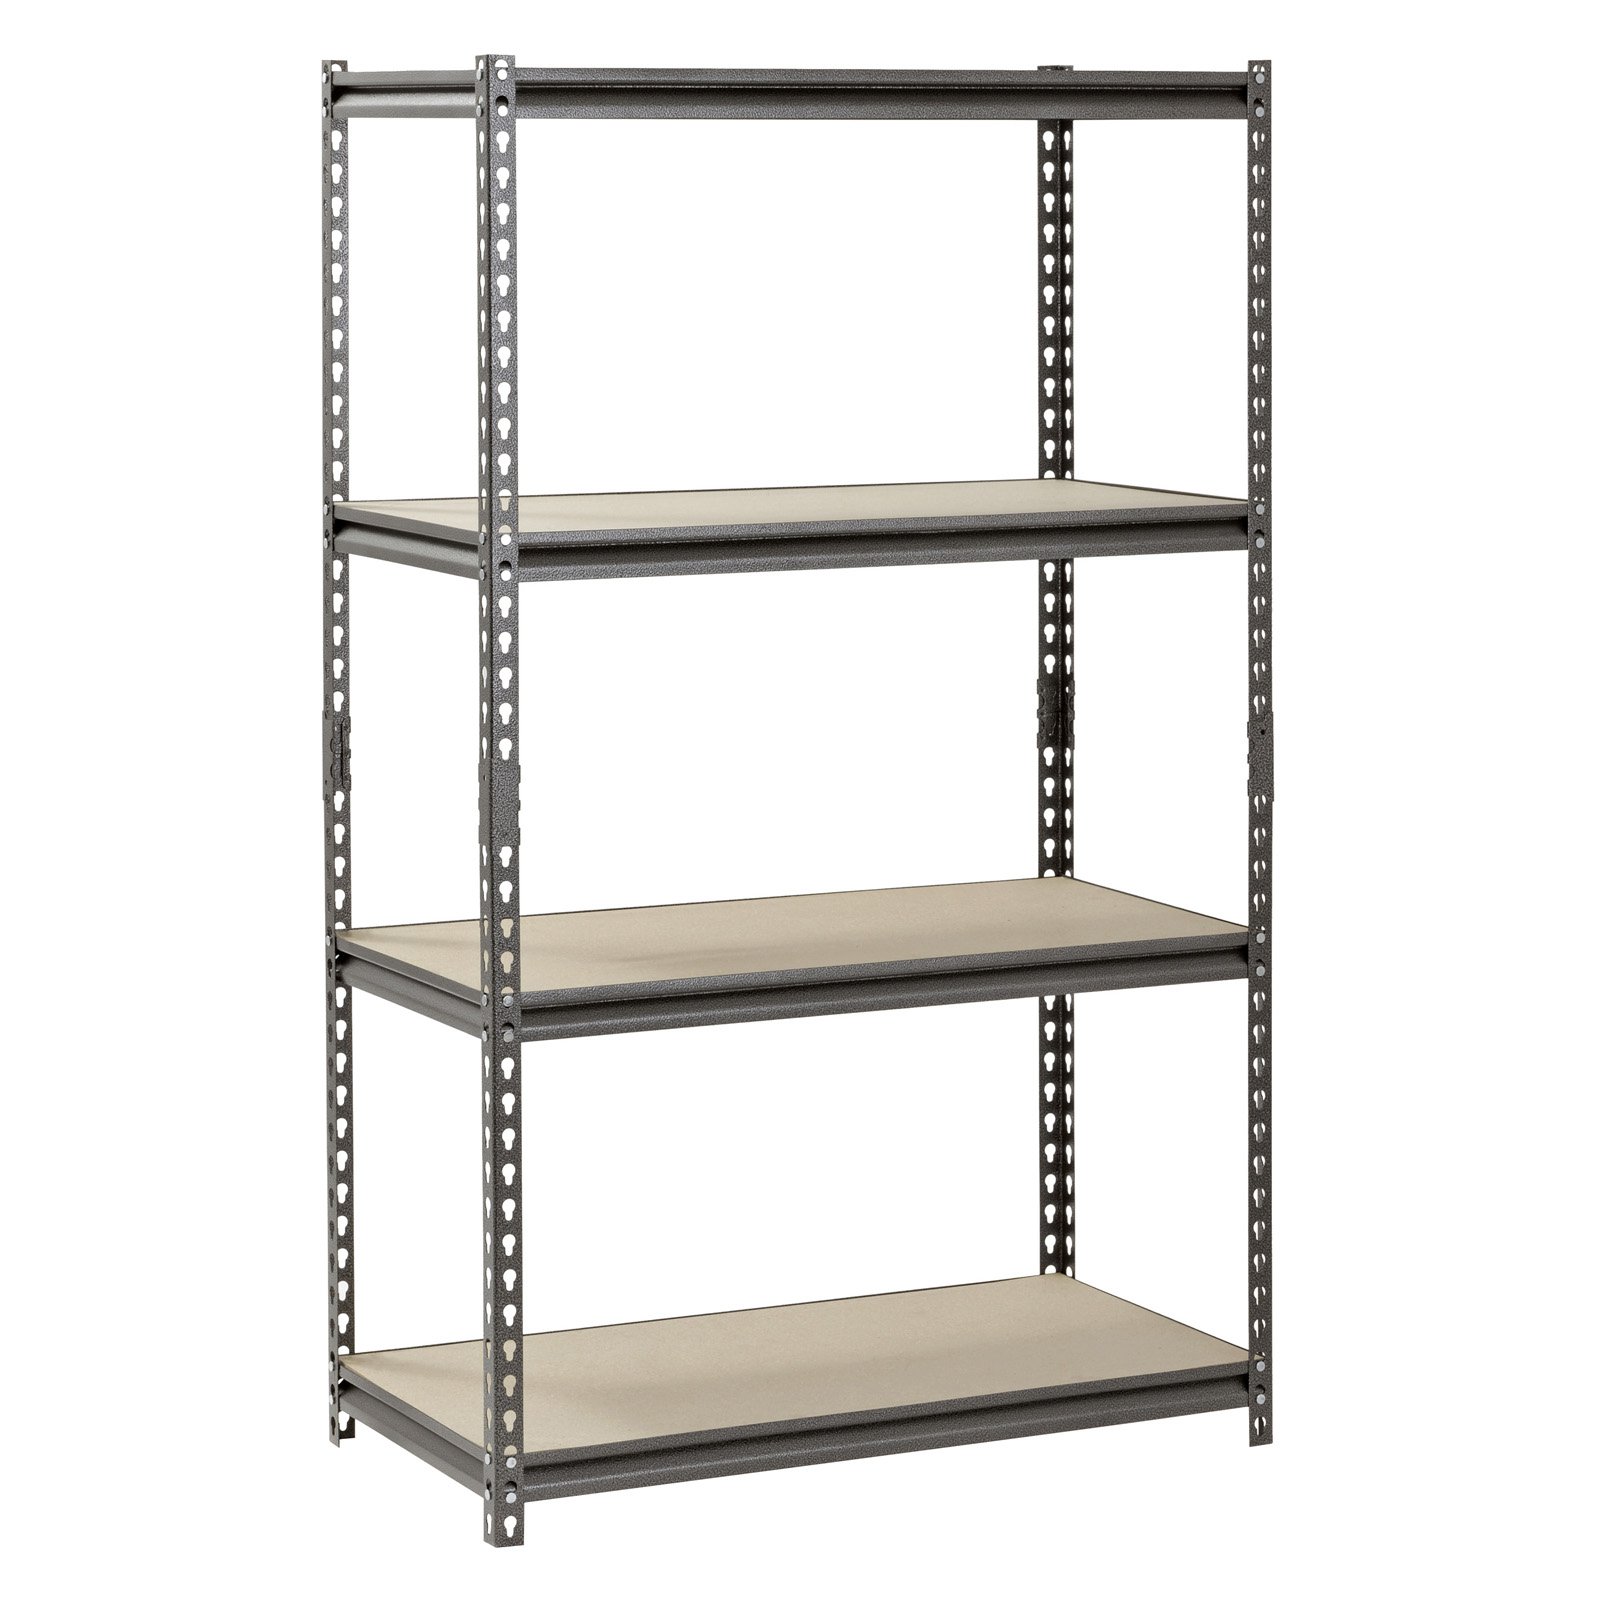 Muscle Rack 36"W x 18"D x 60"H 4-Shelf Steel Freestanding Shelves; 500 lbs. Capacity per Shelf; Silver - image 1 of 3